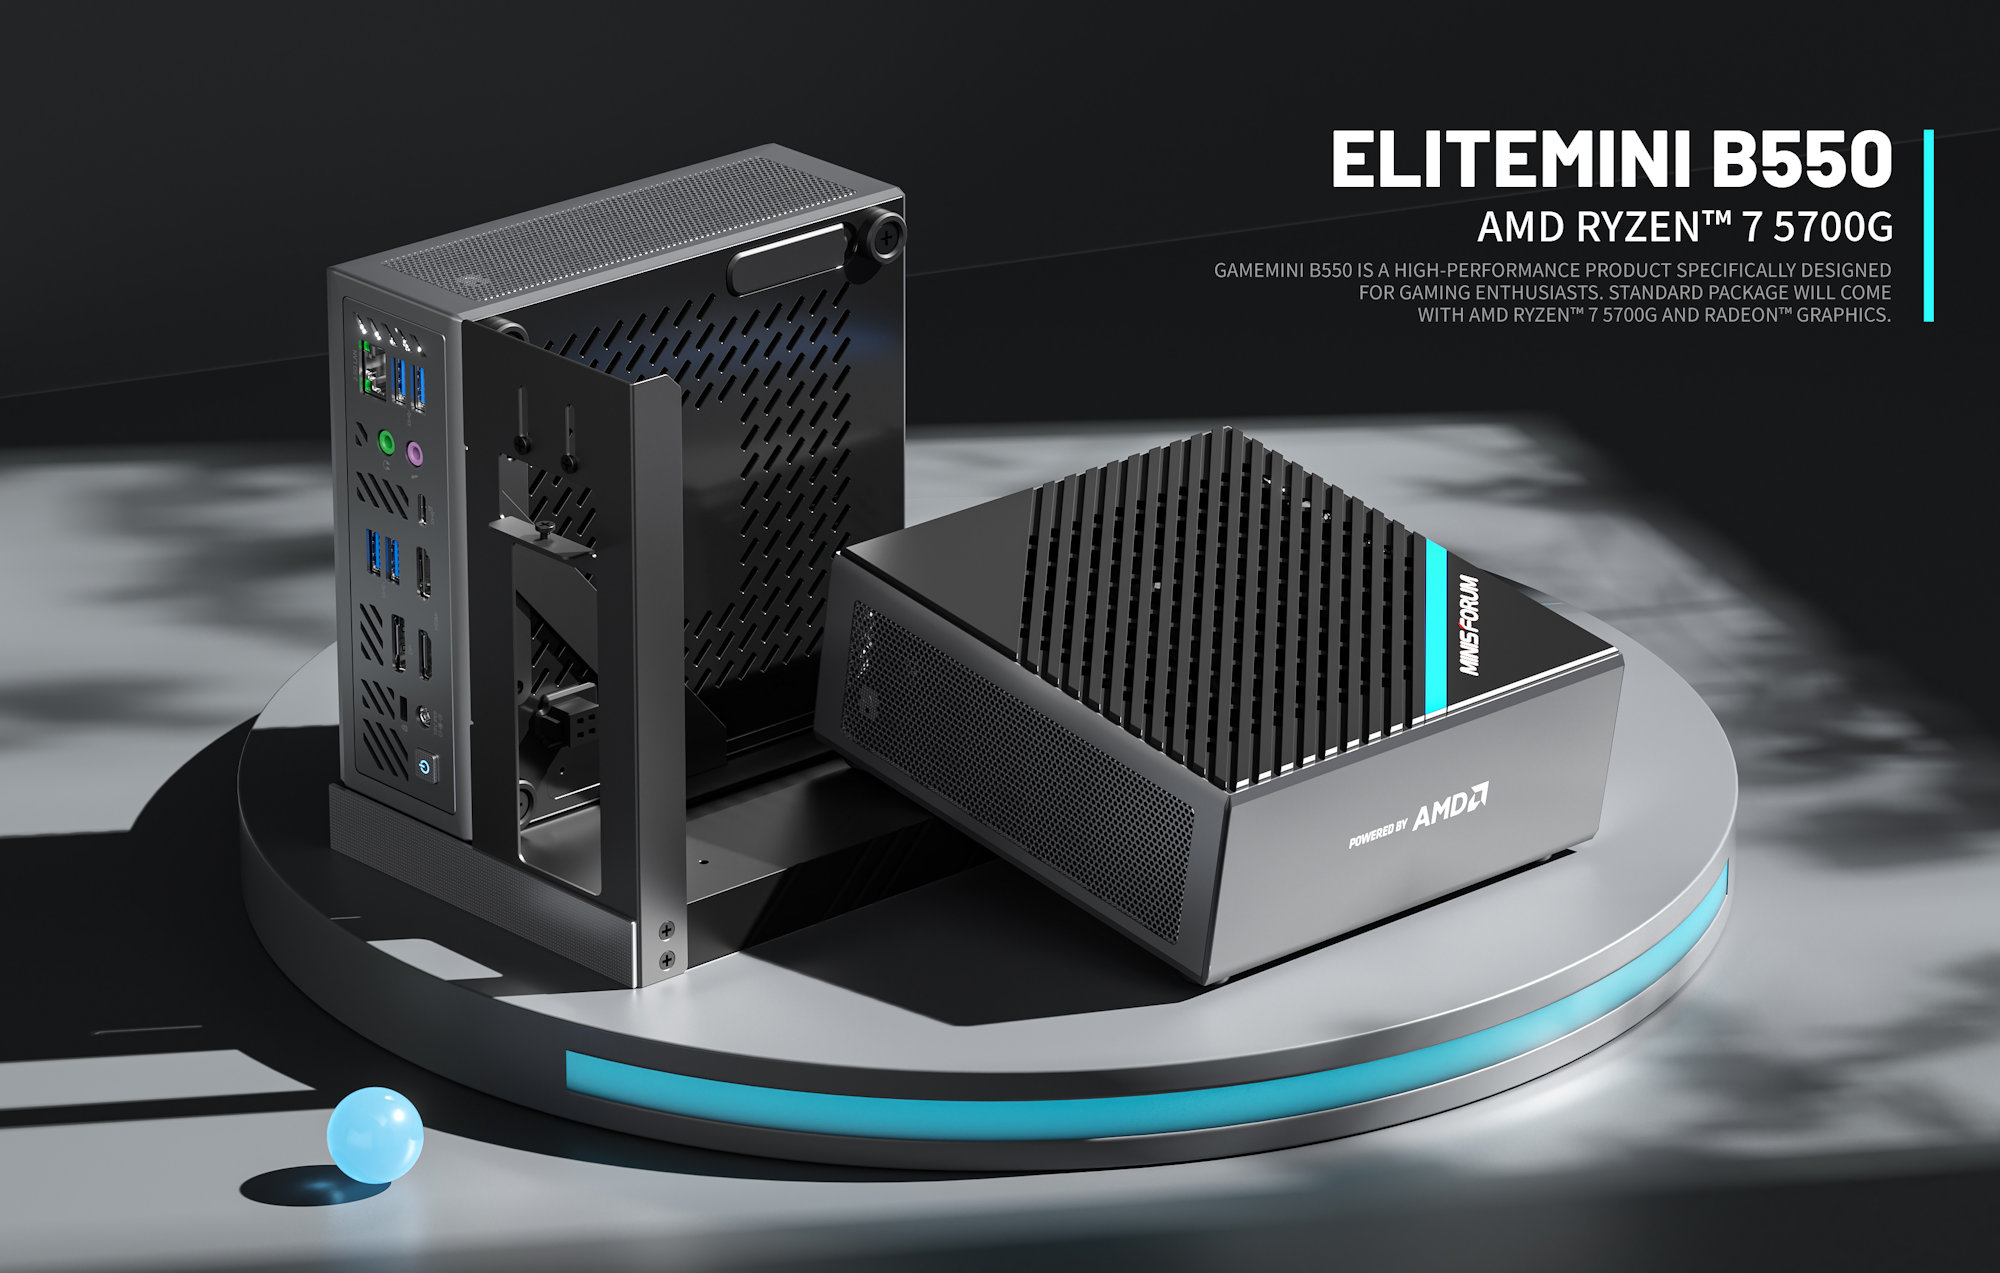 Minisforum launches B550 Mini-PC with Ryzen 7 5700G APU and 